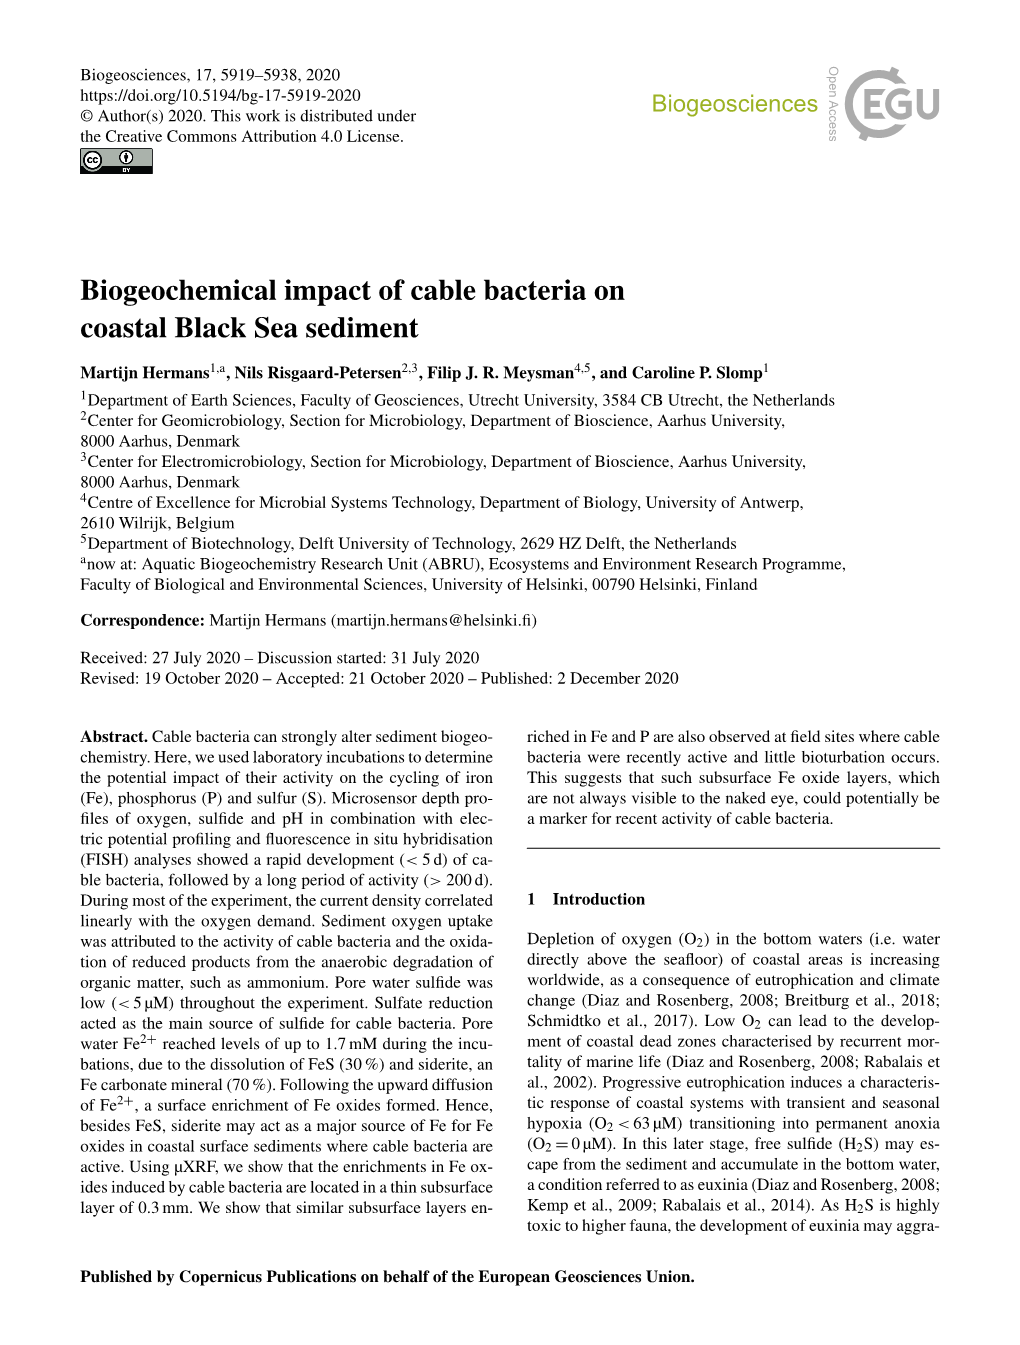 Biogeochemical Impact of Cable Bacteria on Coastal Black Sea Sediment